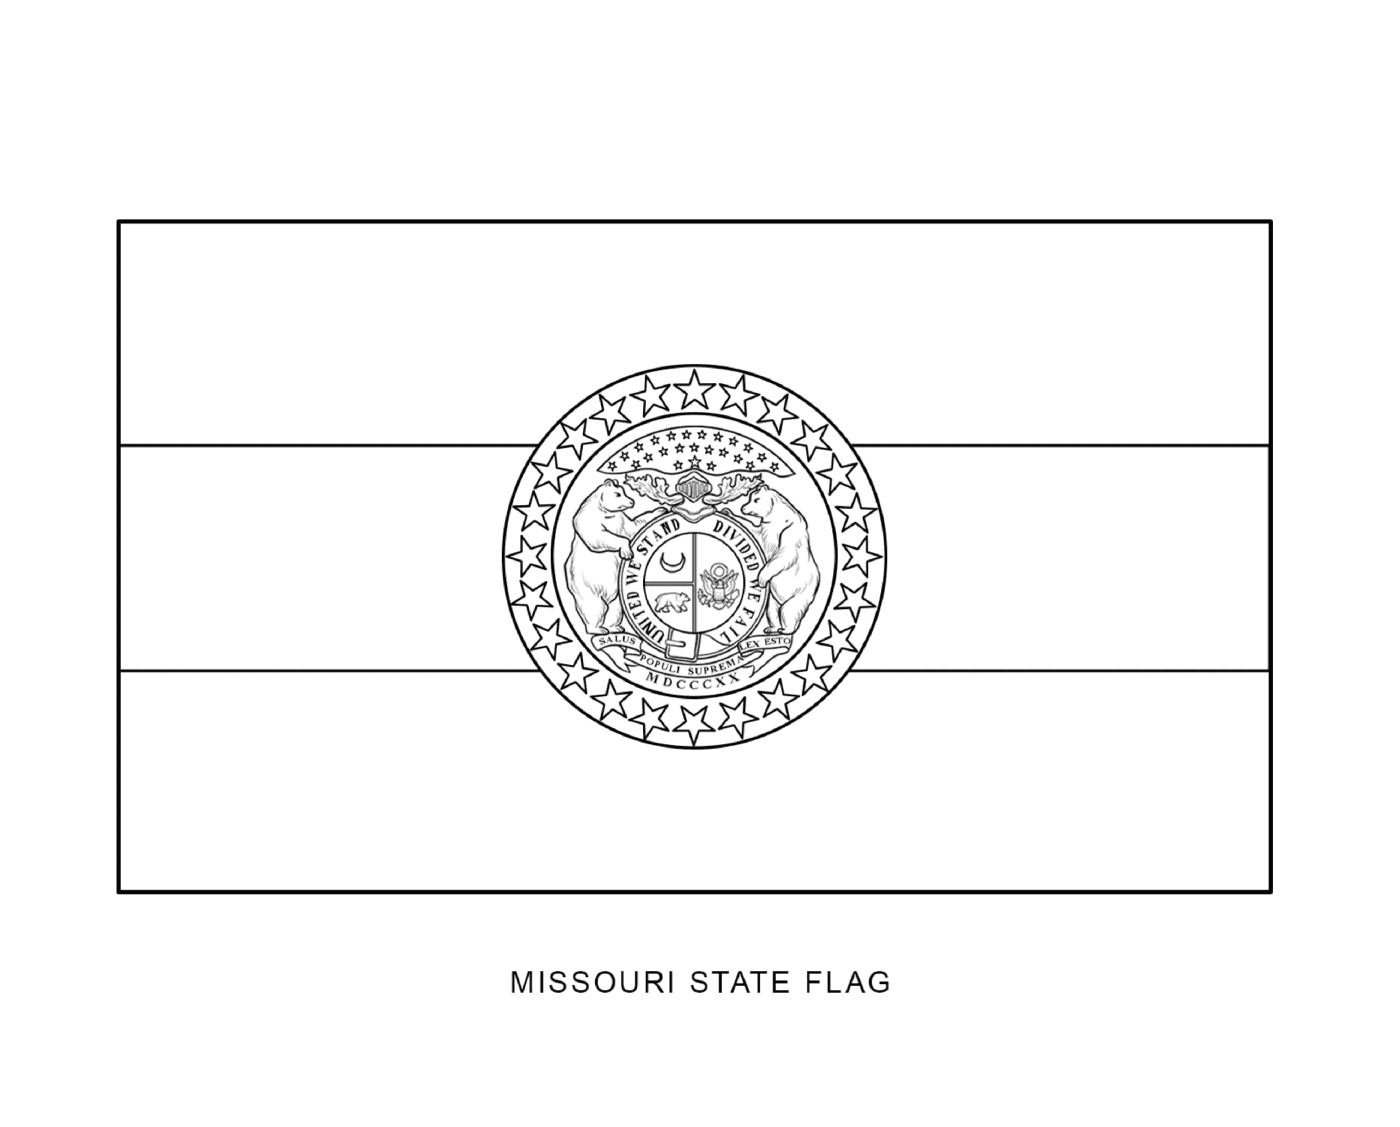  Bandera del estado de Missouri dibujada en tinta negra 